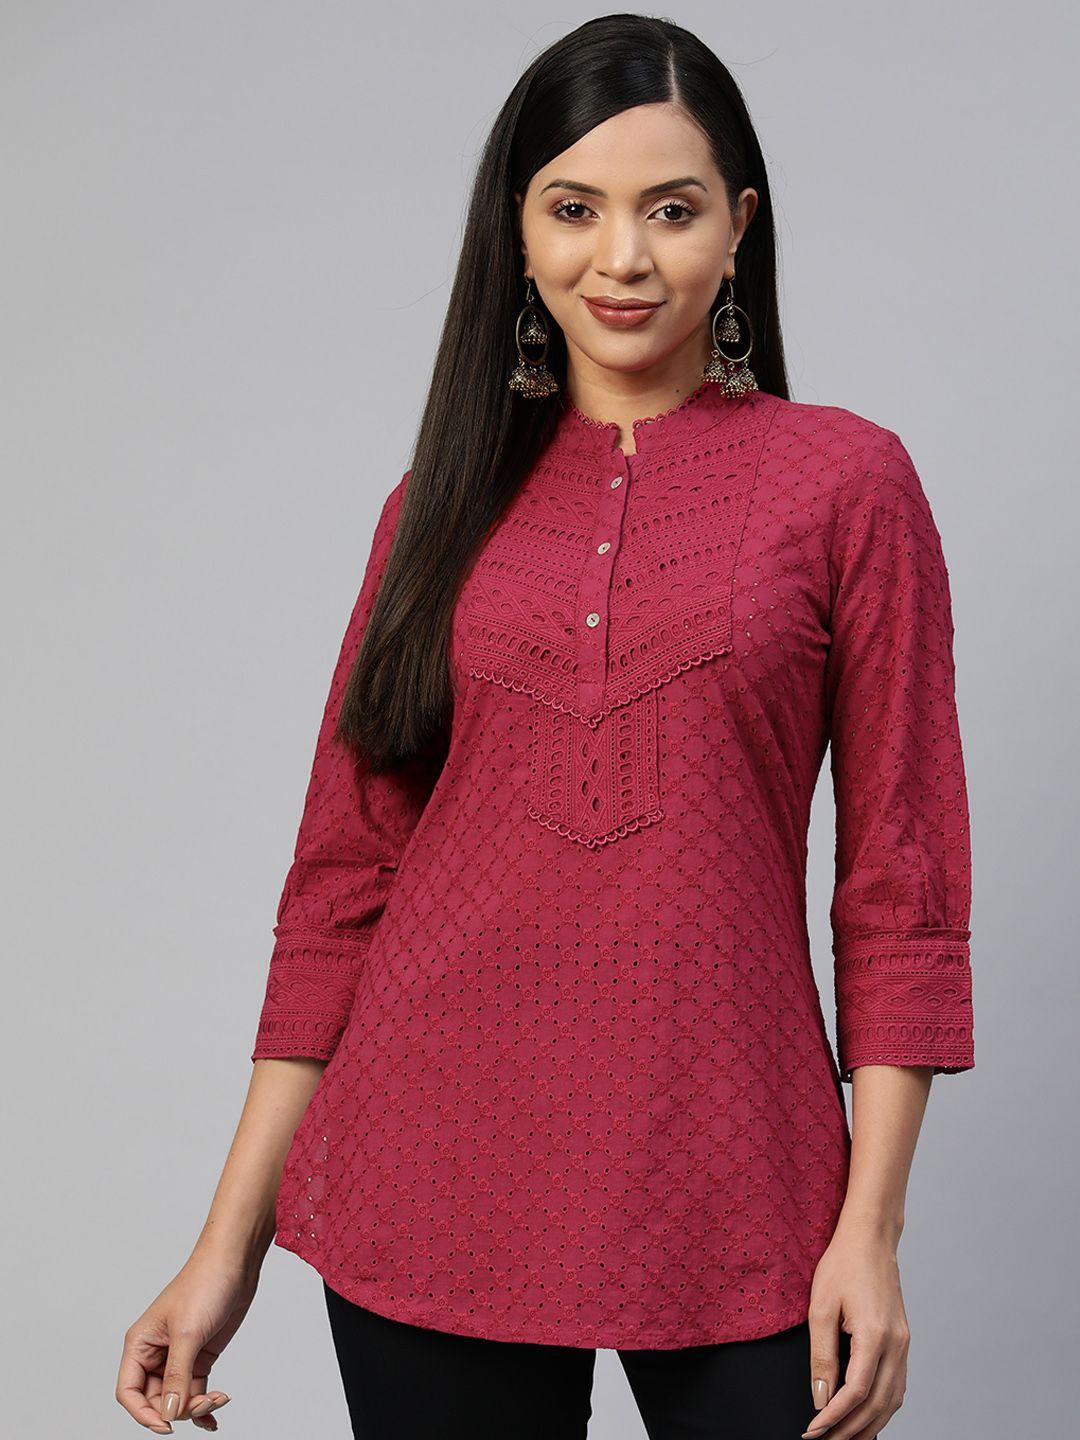 nayam by lakshita mandarin collar cotton schiffli shirt style top